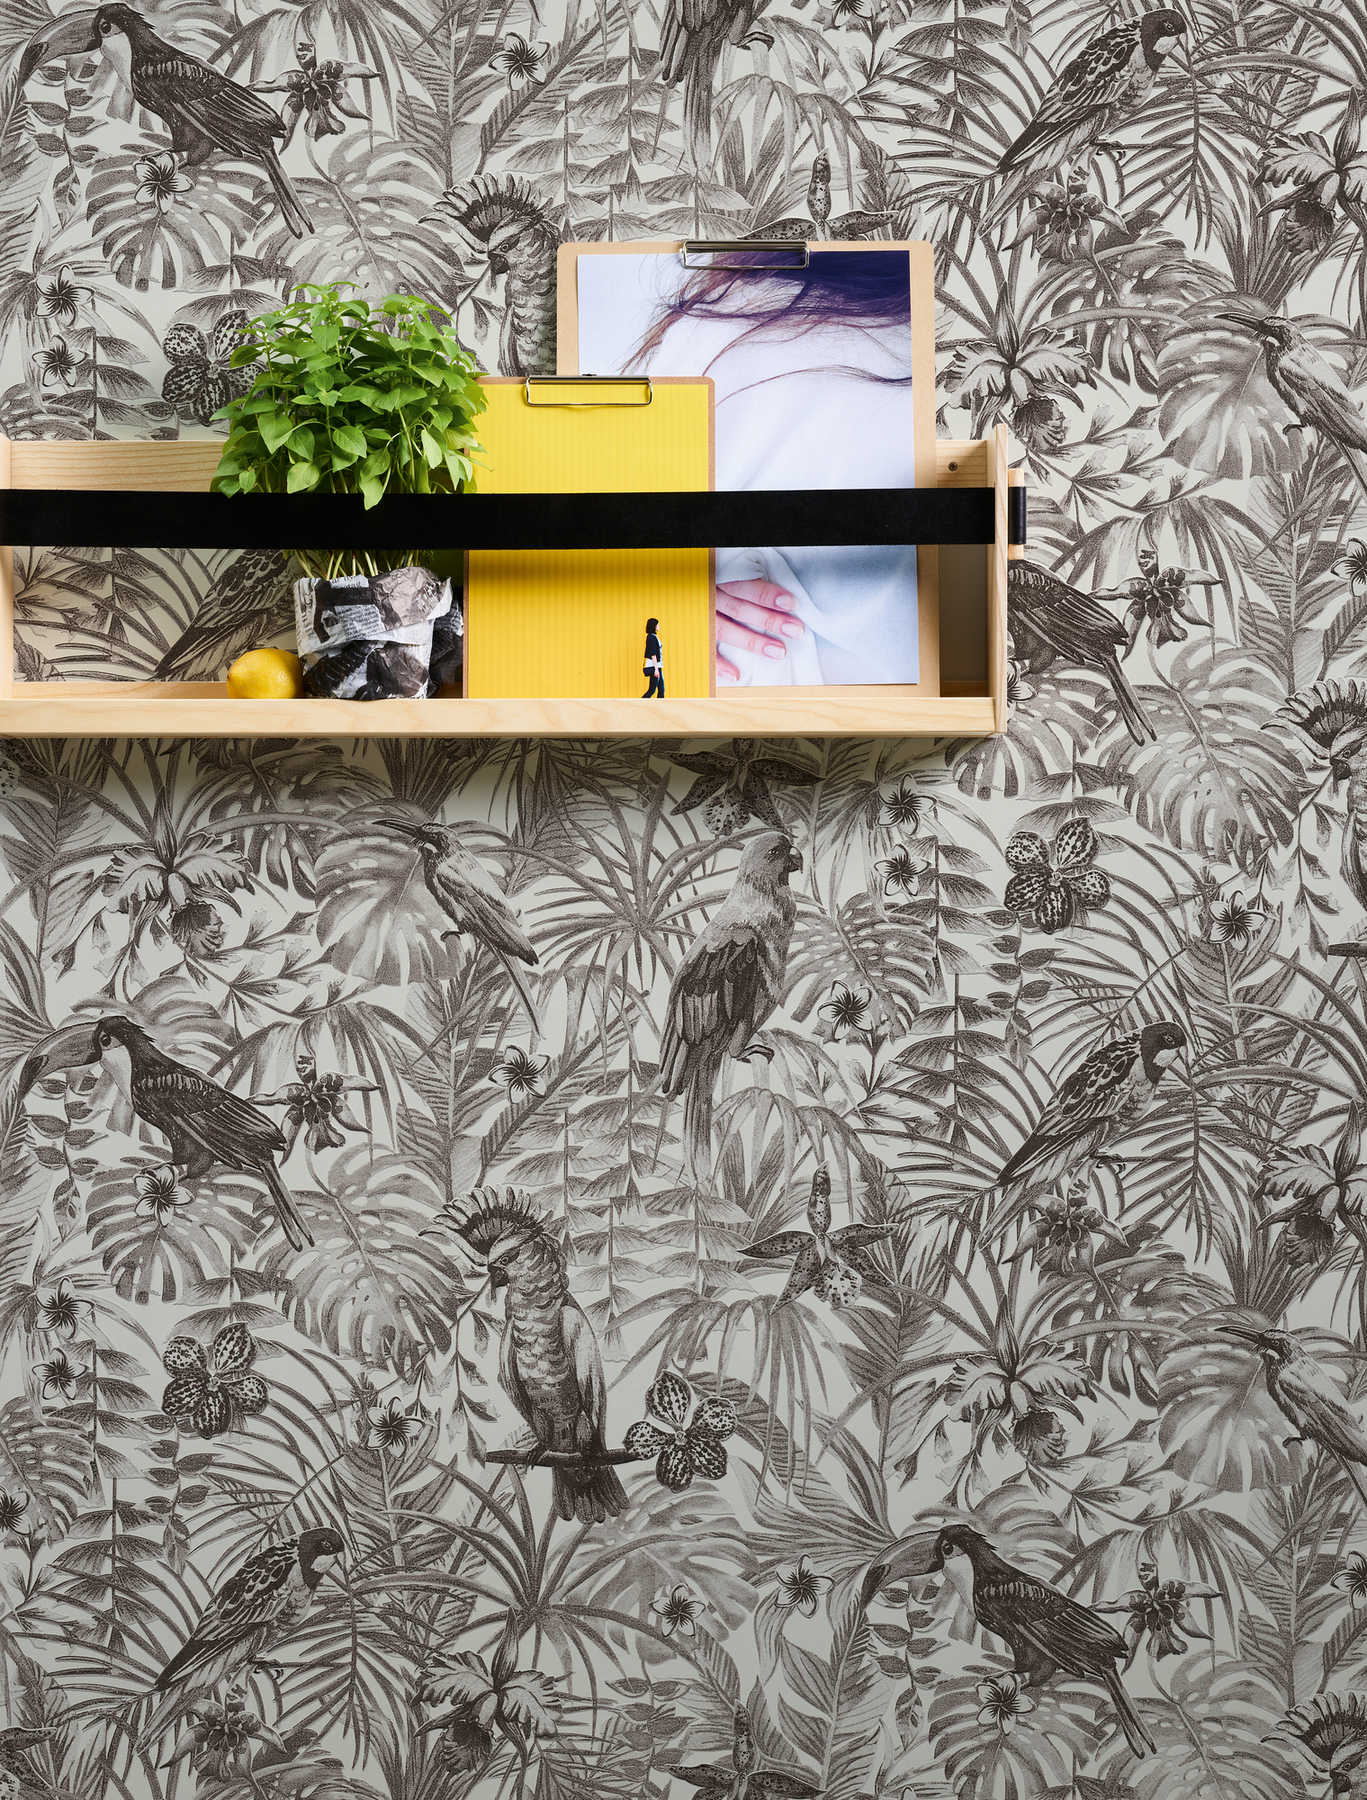             Exotic wallpaper tropical birds, flowers & leaves - black, white, grey
        